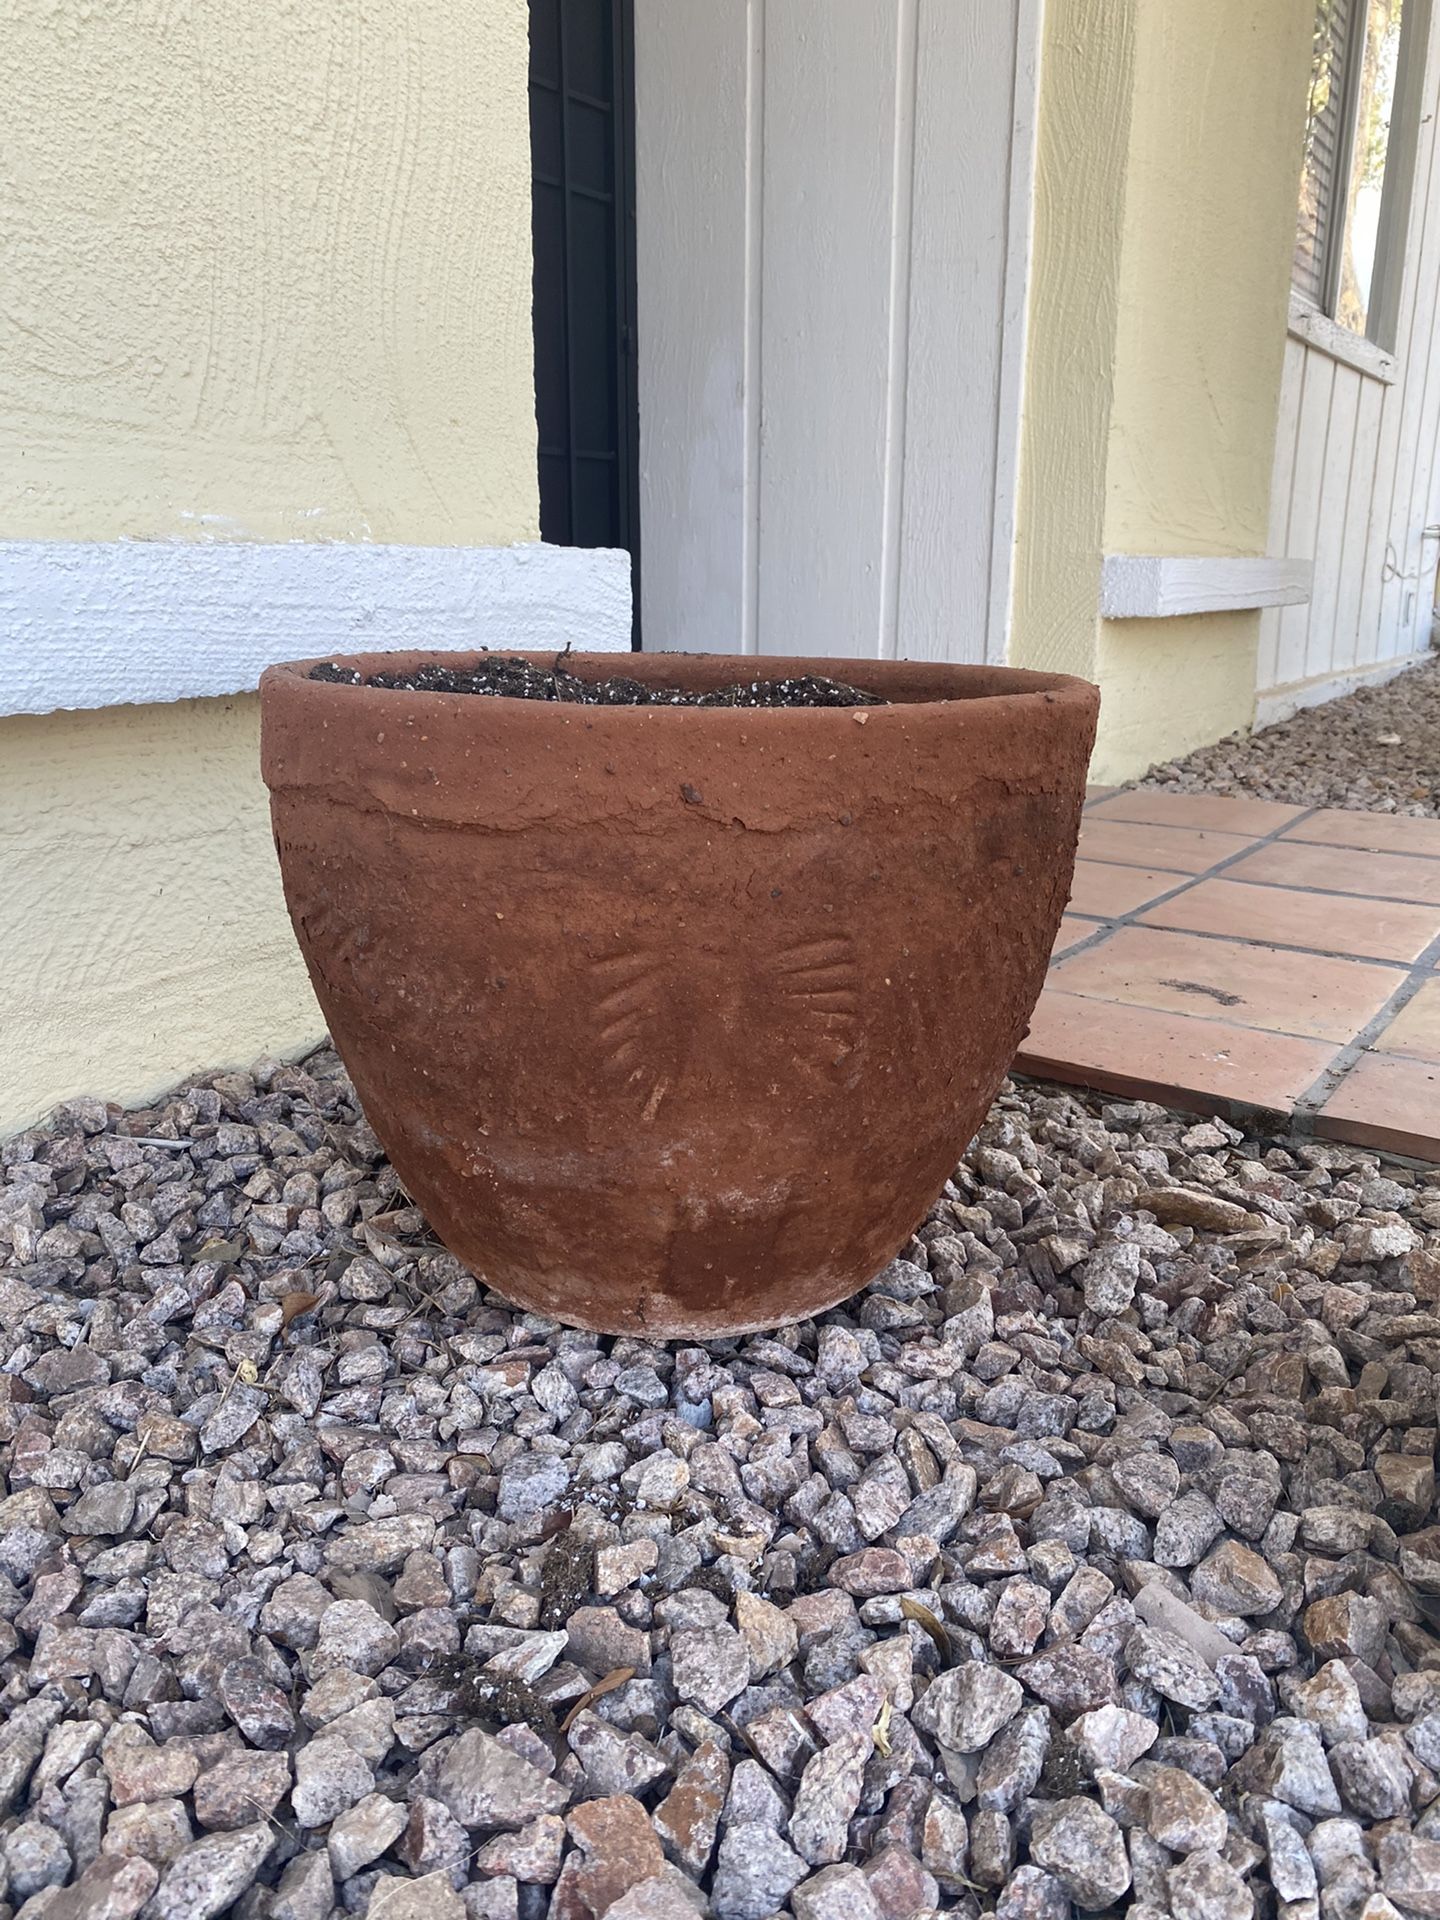 Terra-cotta pots with soil